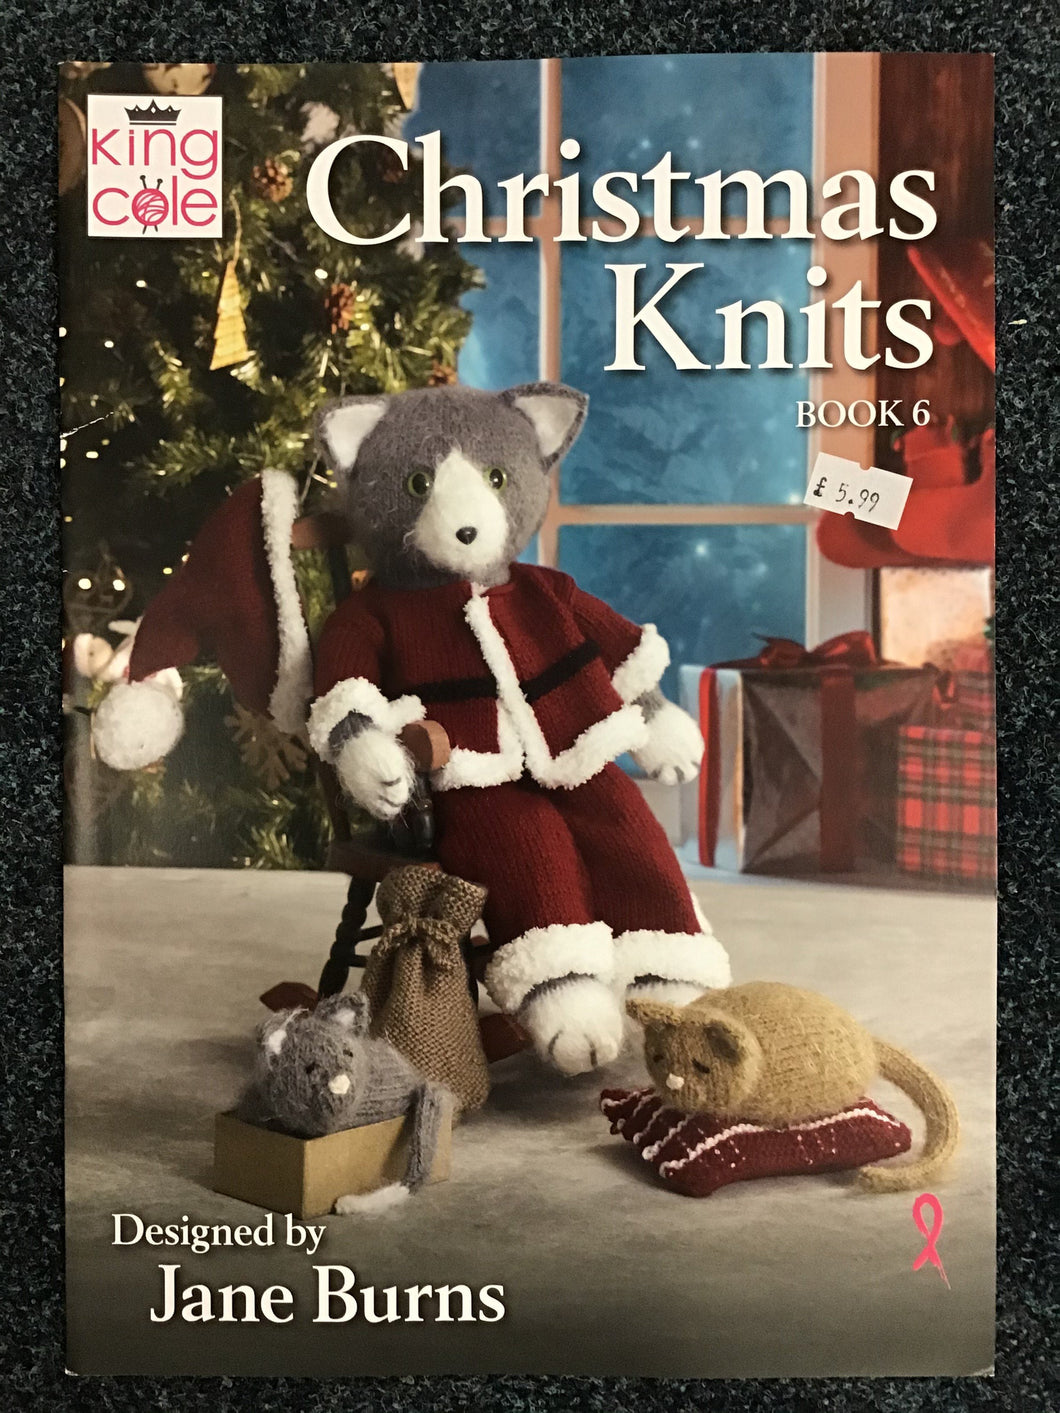 King Cole Christmas Pattern Books